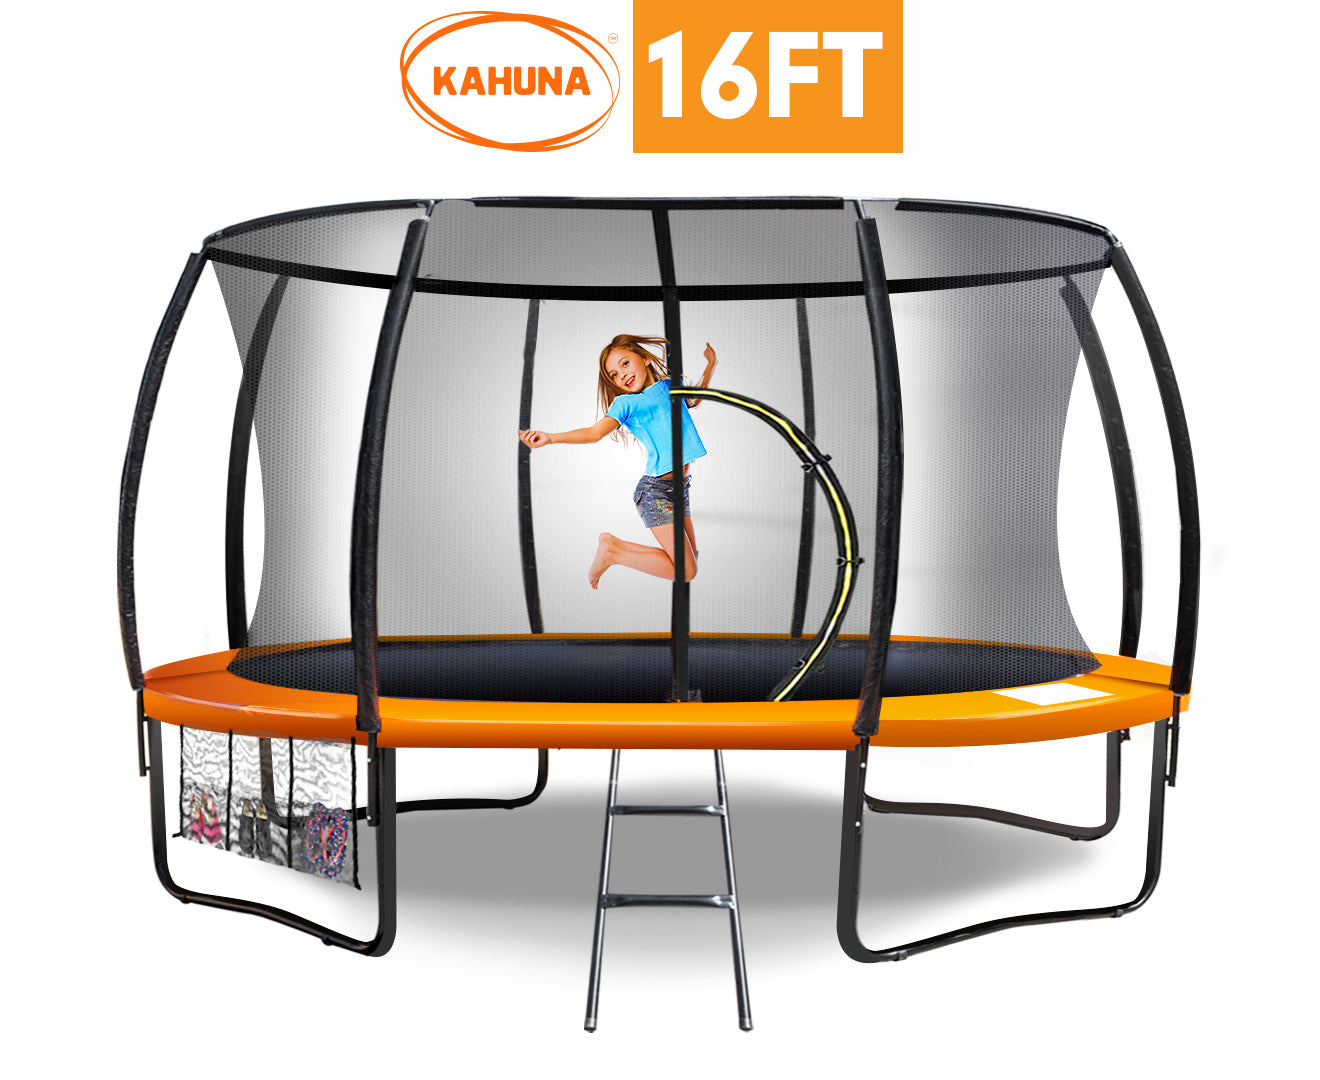 Kahuna Classic 16ft Trampoline